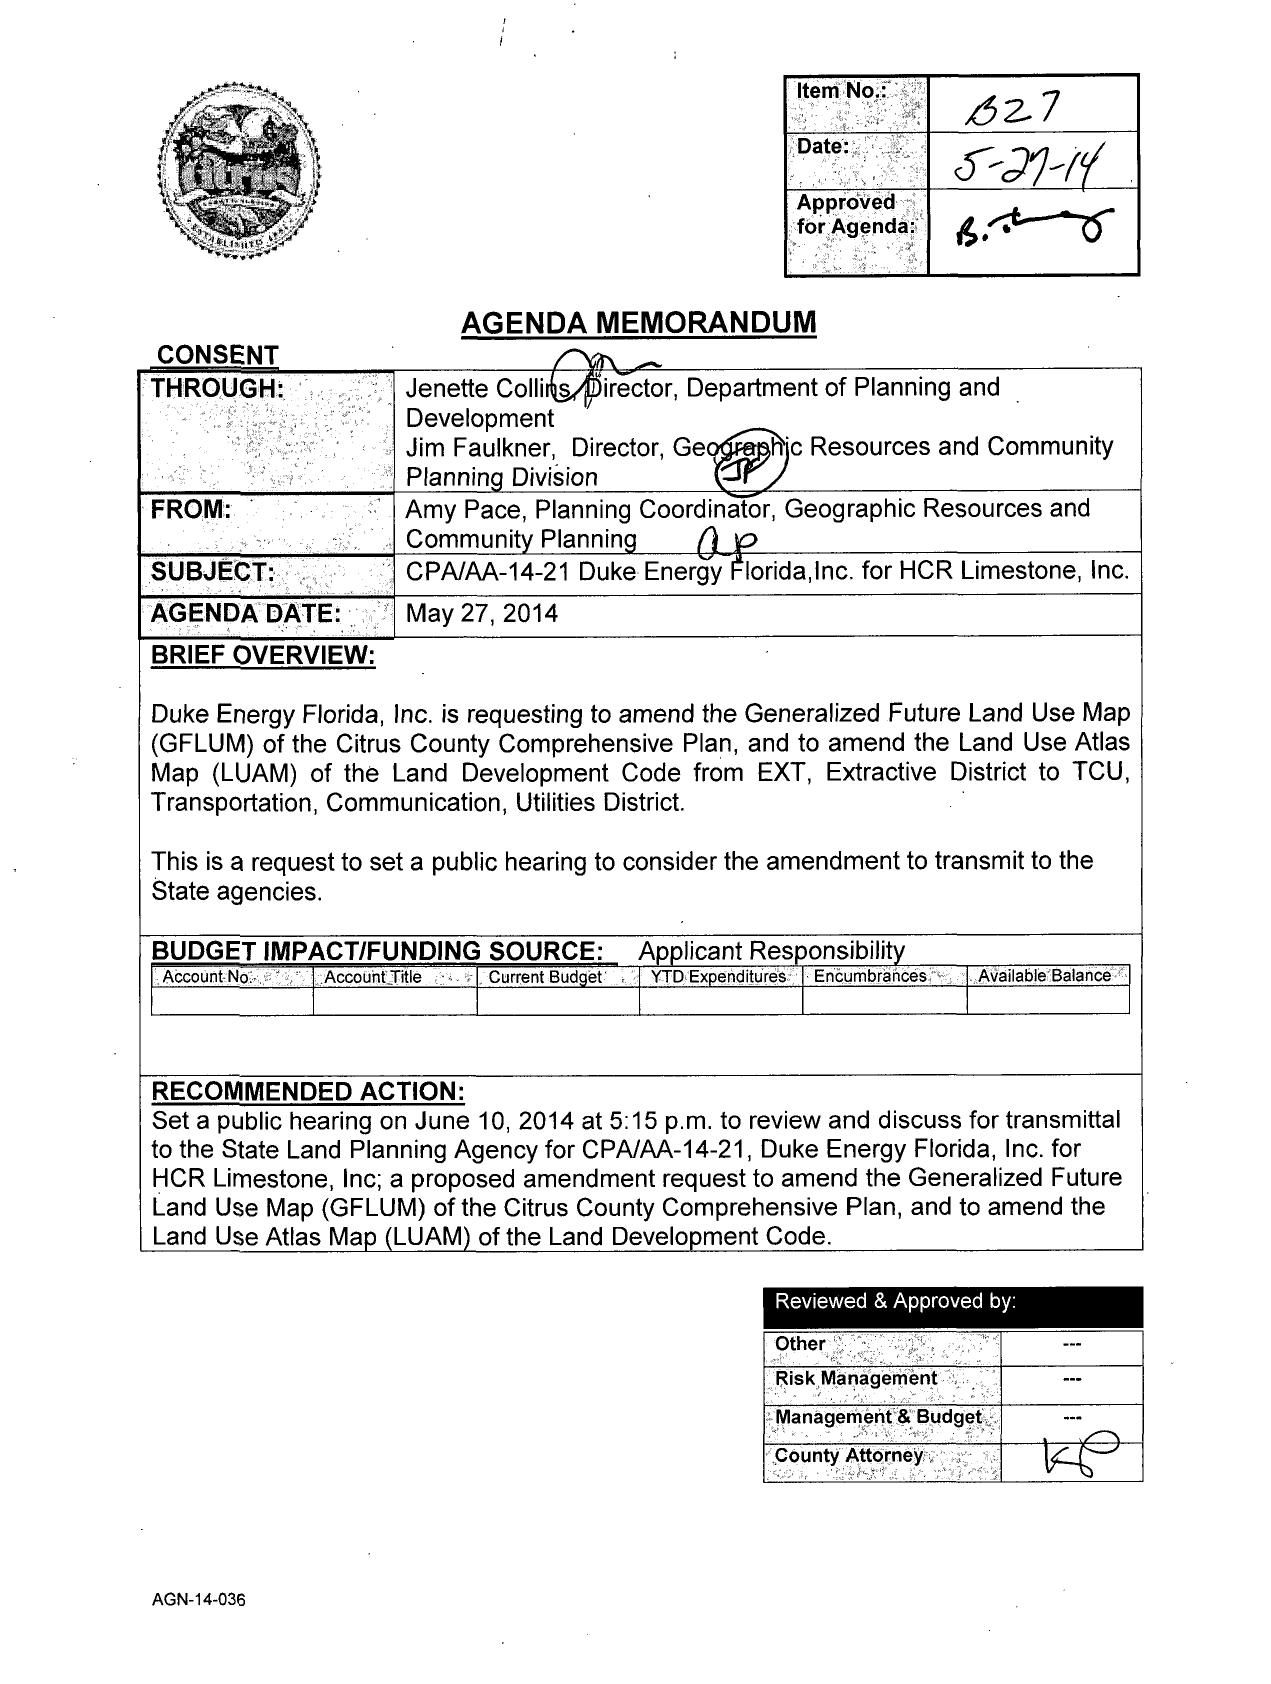 1271x1684 Agenda Memorandum, in Re-designation to TCU, Transportation, Communication, Utilities District, by Duke Energy, for SpectraBusters.org, 27 May 2014